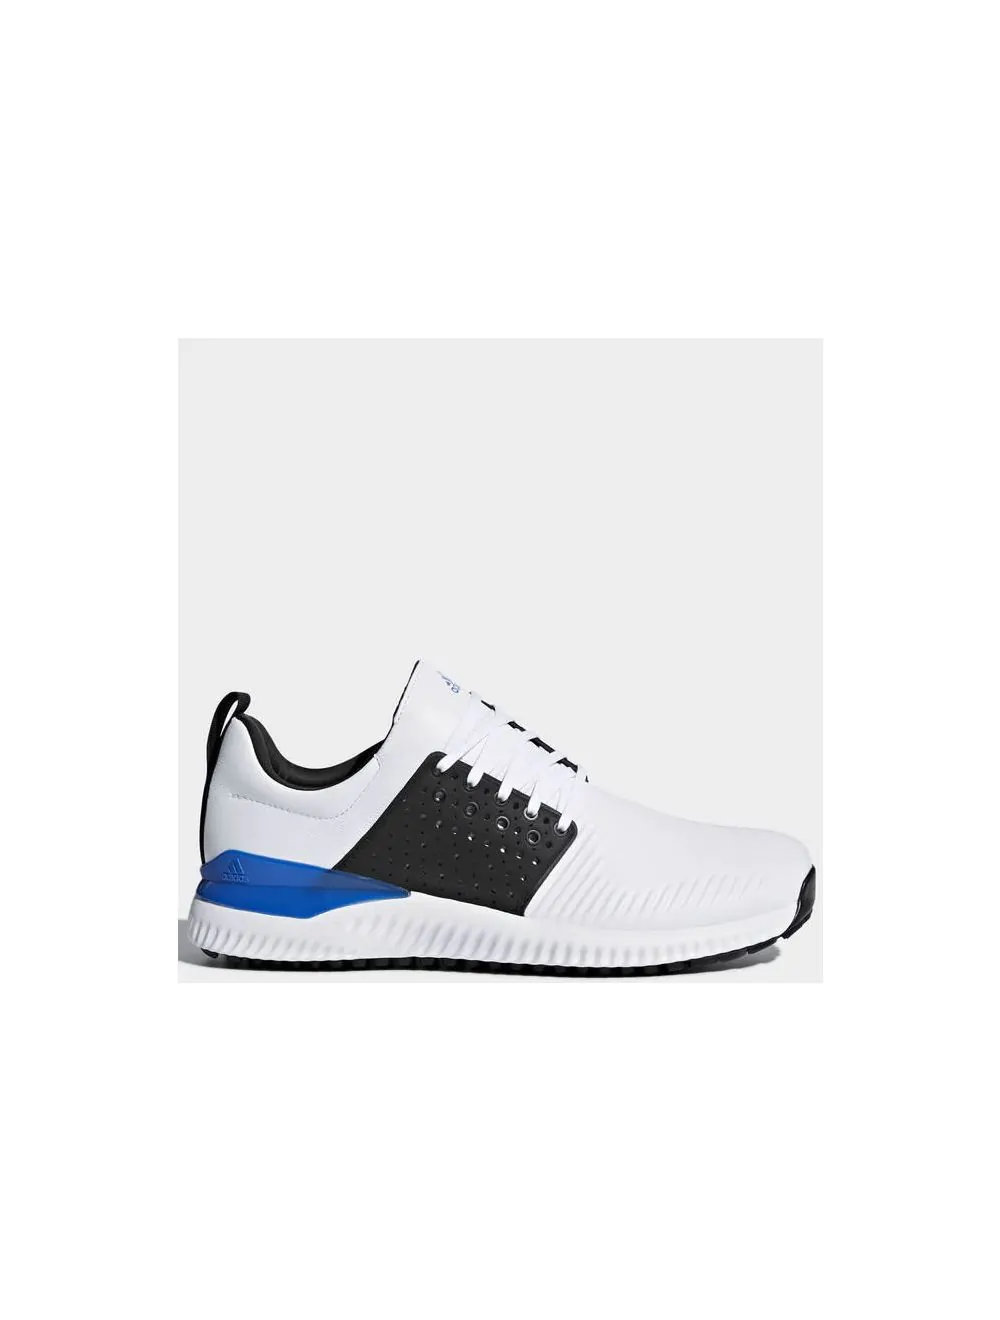 Representación Chip dilema adidas Adicross Bounce Leather Golf Shoes - White/Core Black/Blue